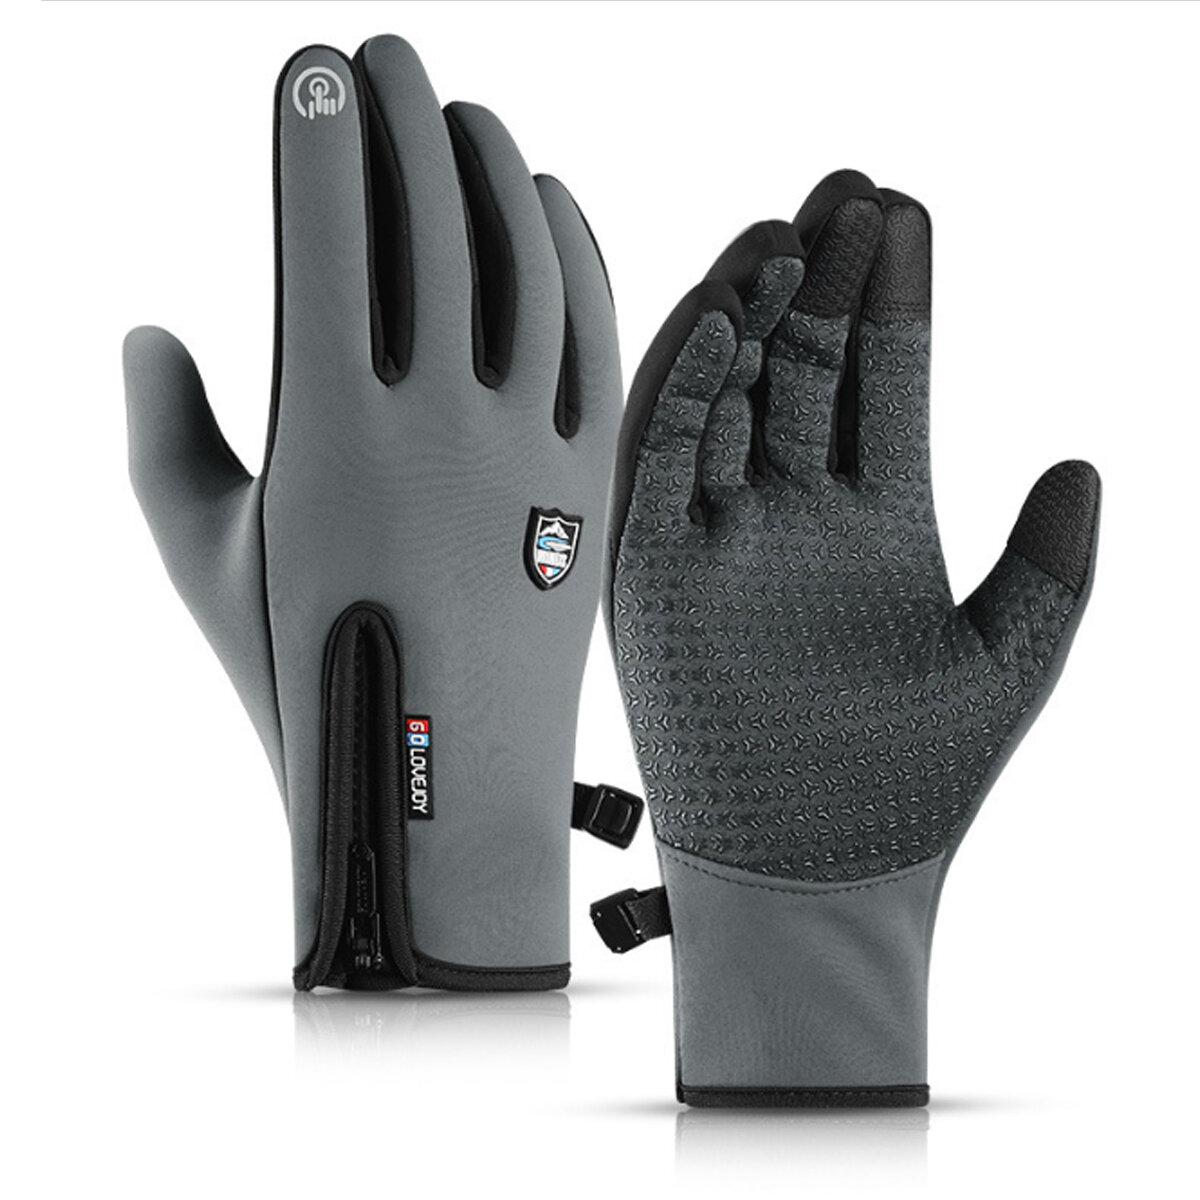 Winter Warm Thermal Gloves Non-slip Cycling Touchscreen Windrproof Waterproof Bike Glove